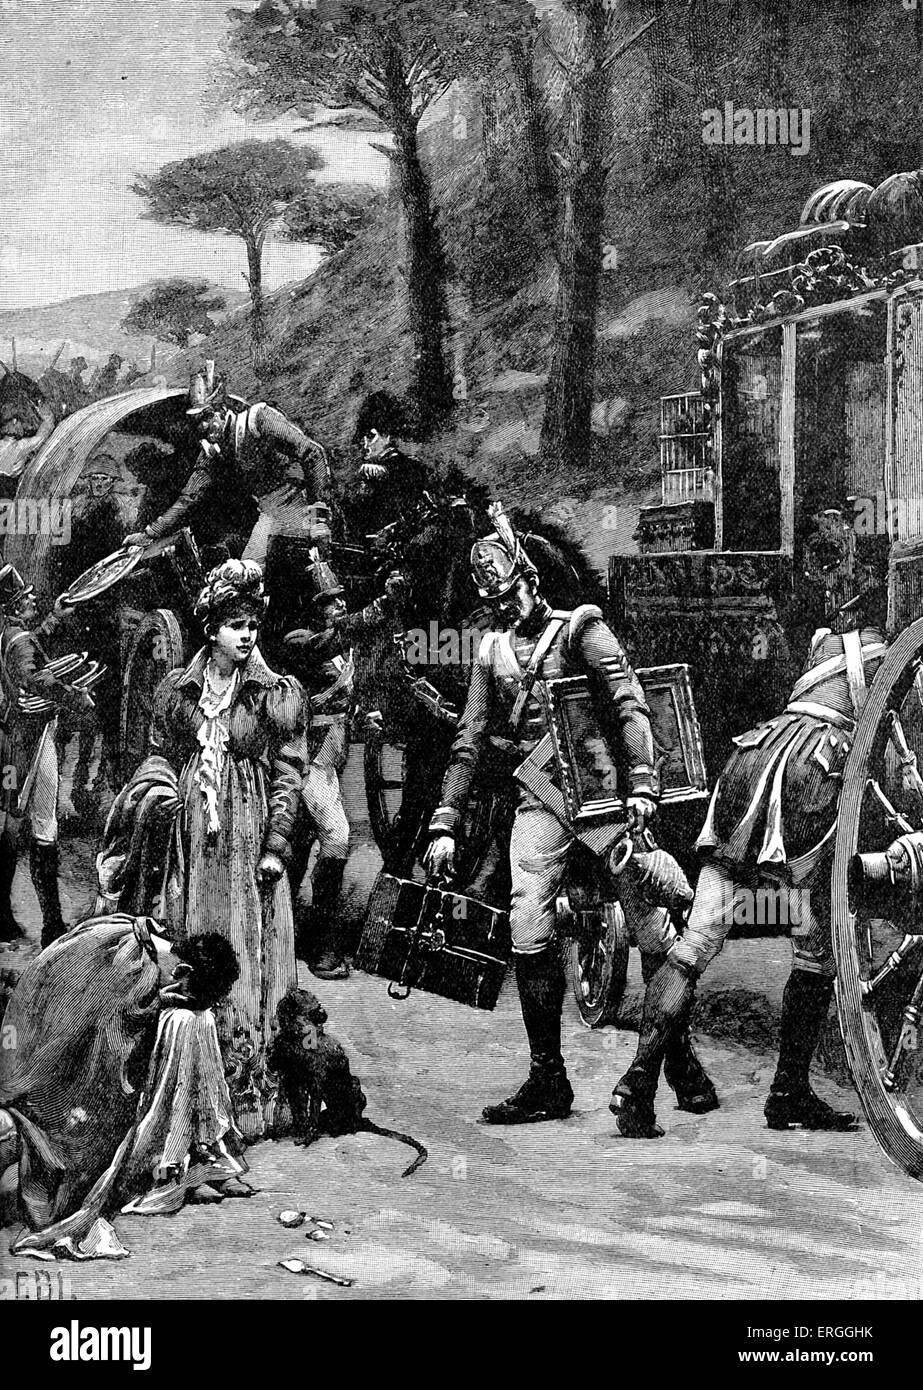 Battle of Vitoria, Spain, 21 June 1813 during Penisula War of the Napoleonic Wars. King Joseph Bonaparte fleeing Vitoria. Stock Photo